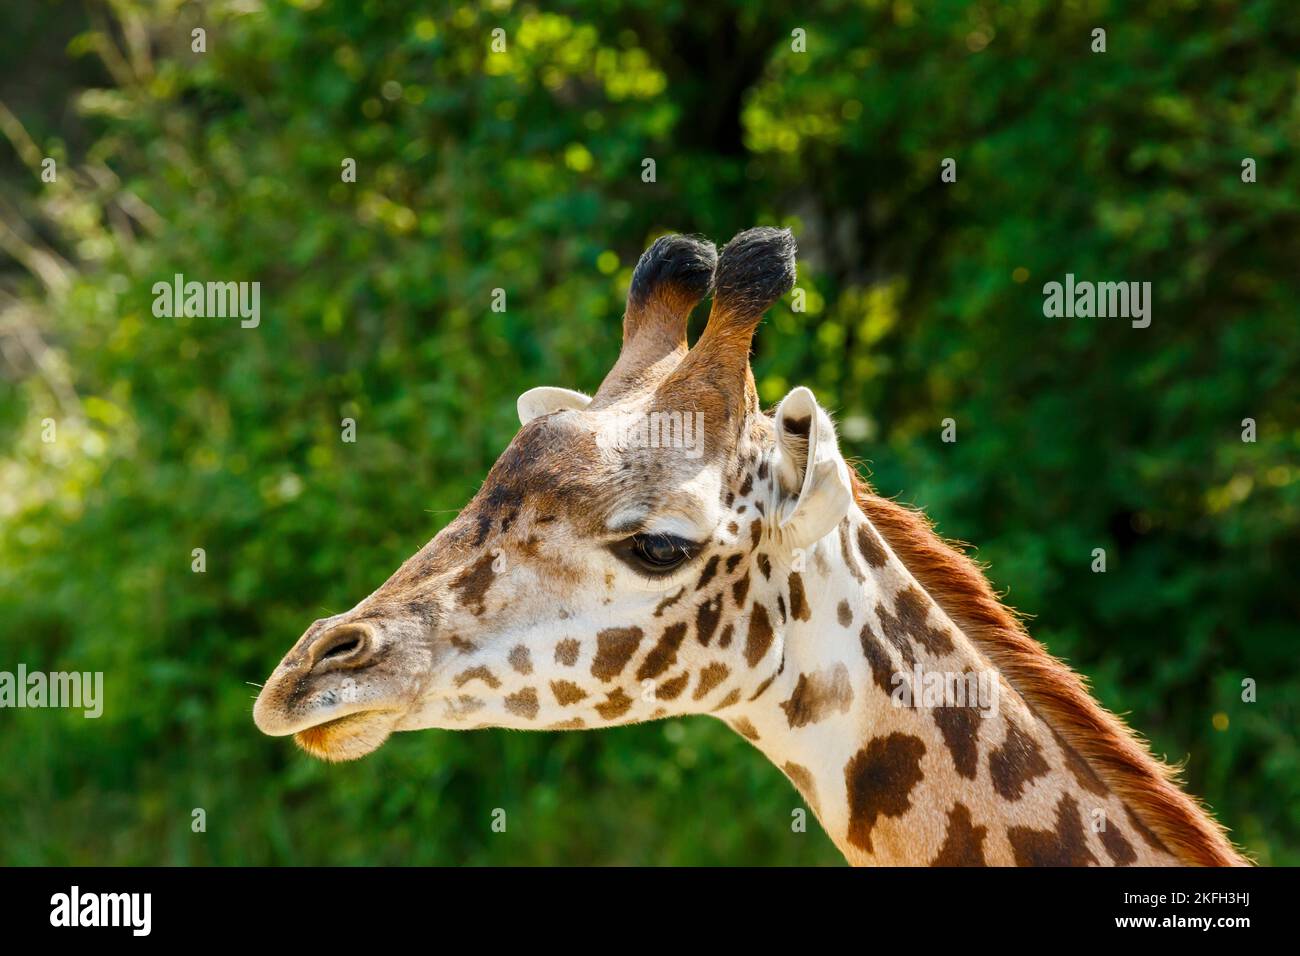 Maasai Giraffe. Zoo et jardin botanique de Cincinnati, Cincinnati, Ohio, États-Unis. Banque D'Images